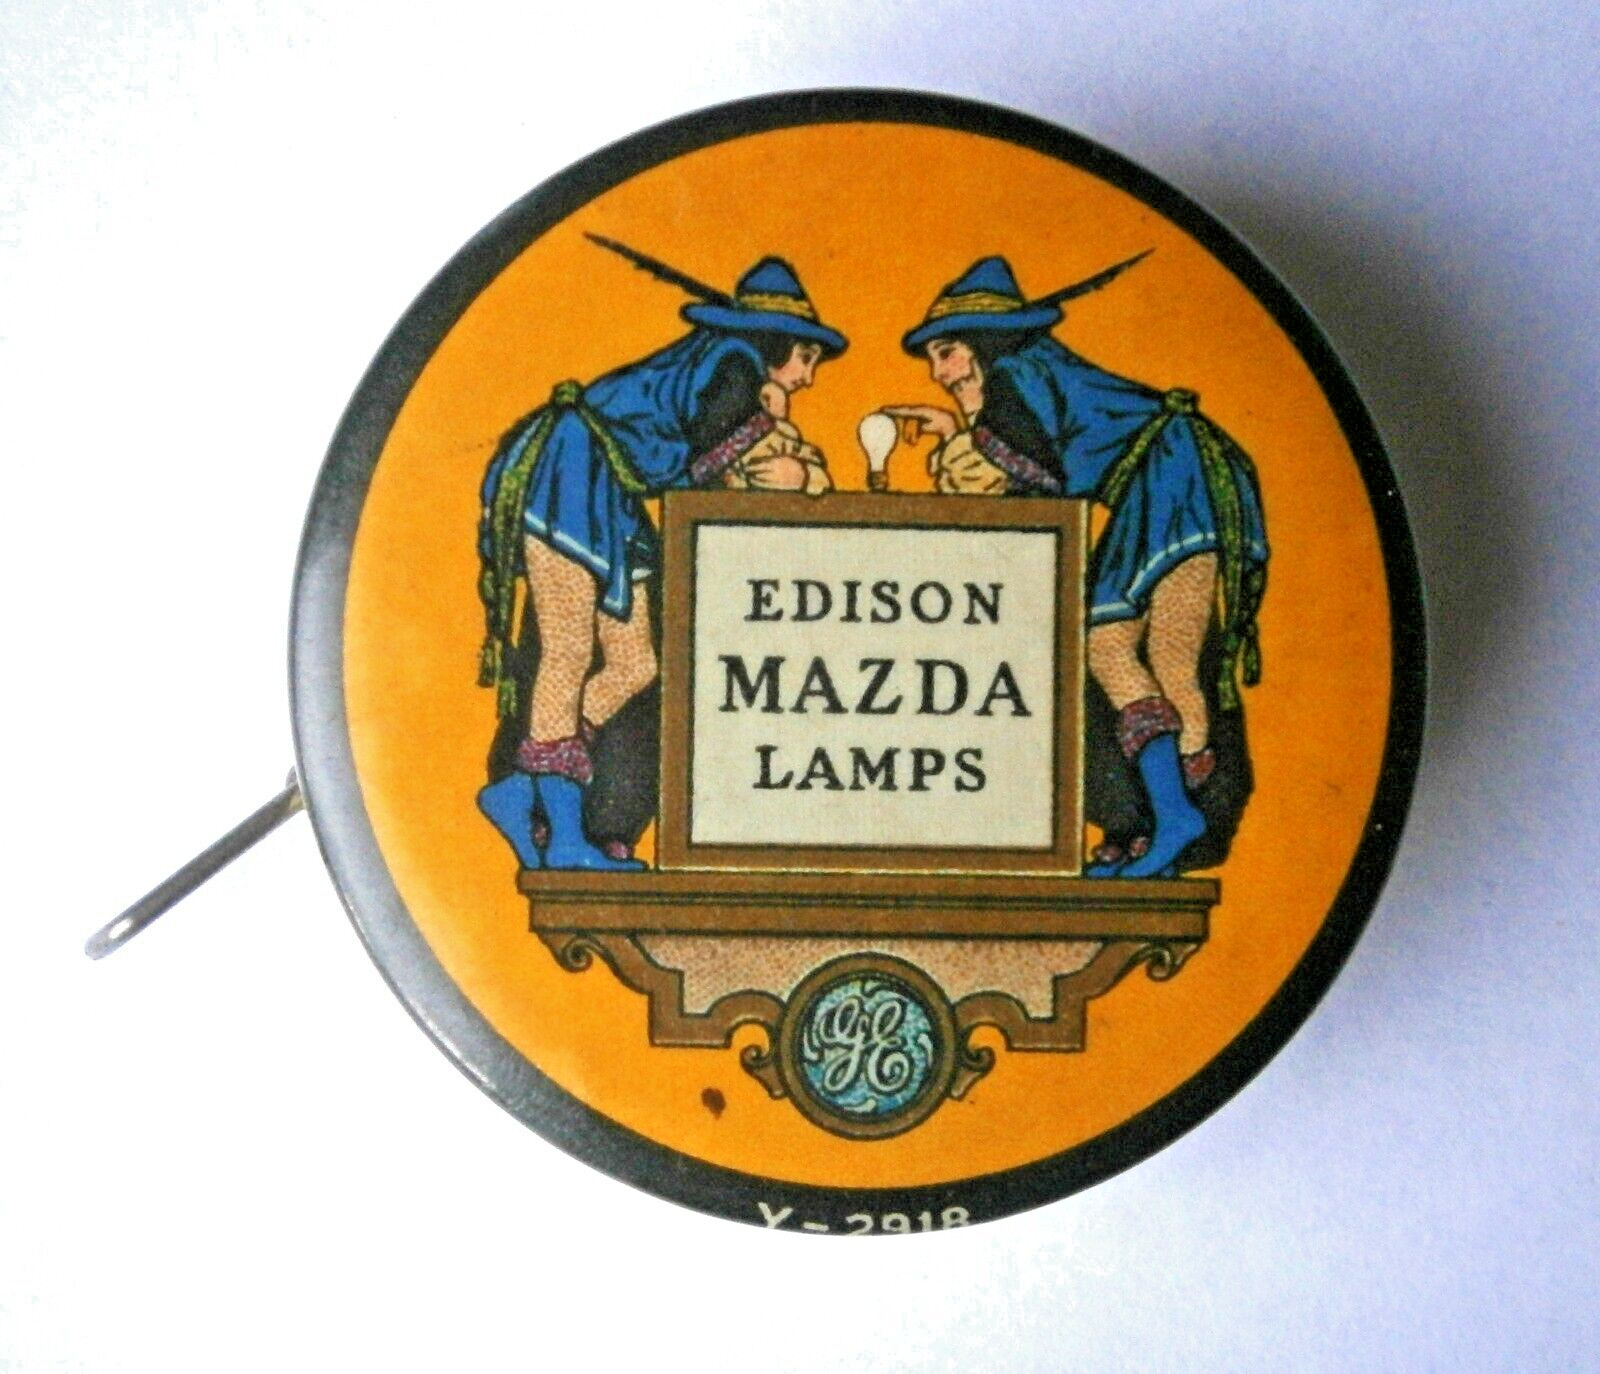 Edison Mazda Lamps Advertising Tape Measure designed by Maxfield Parish